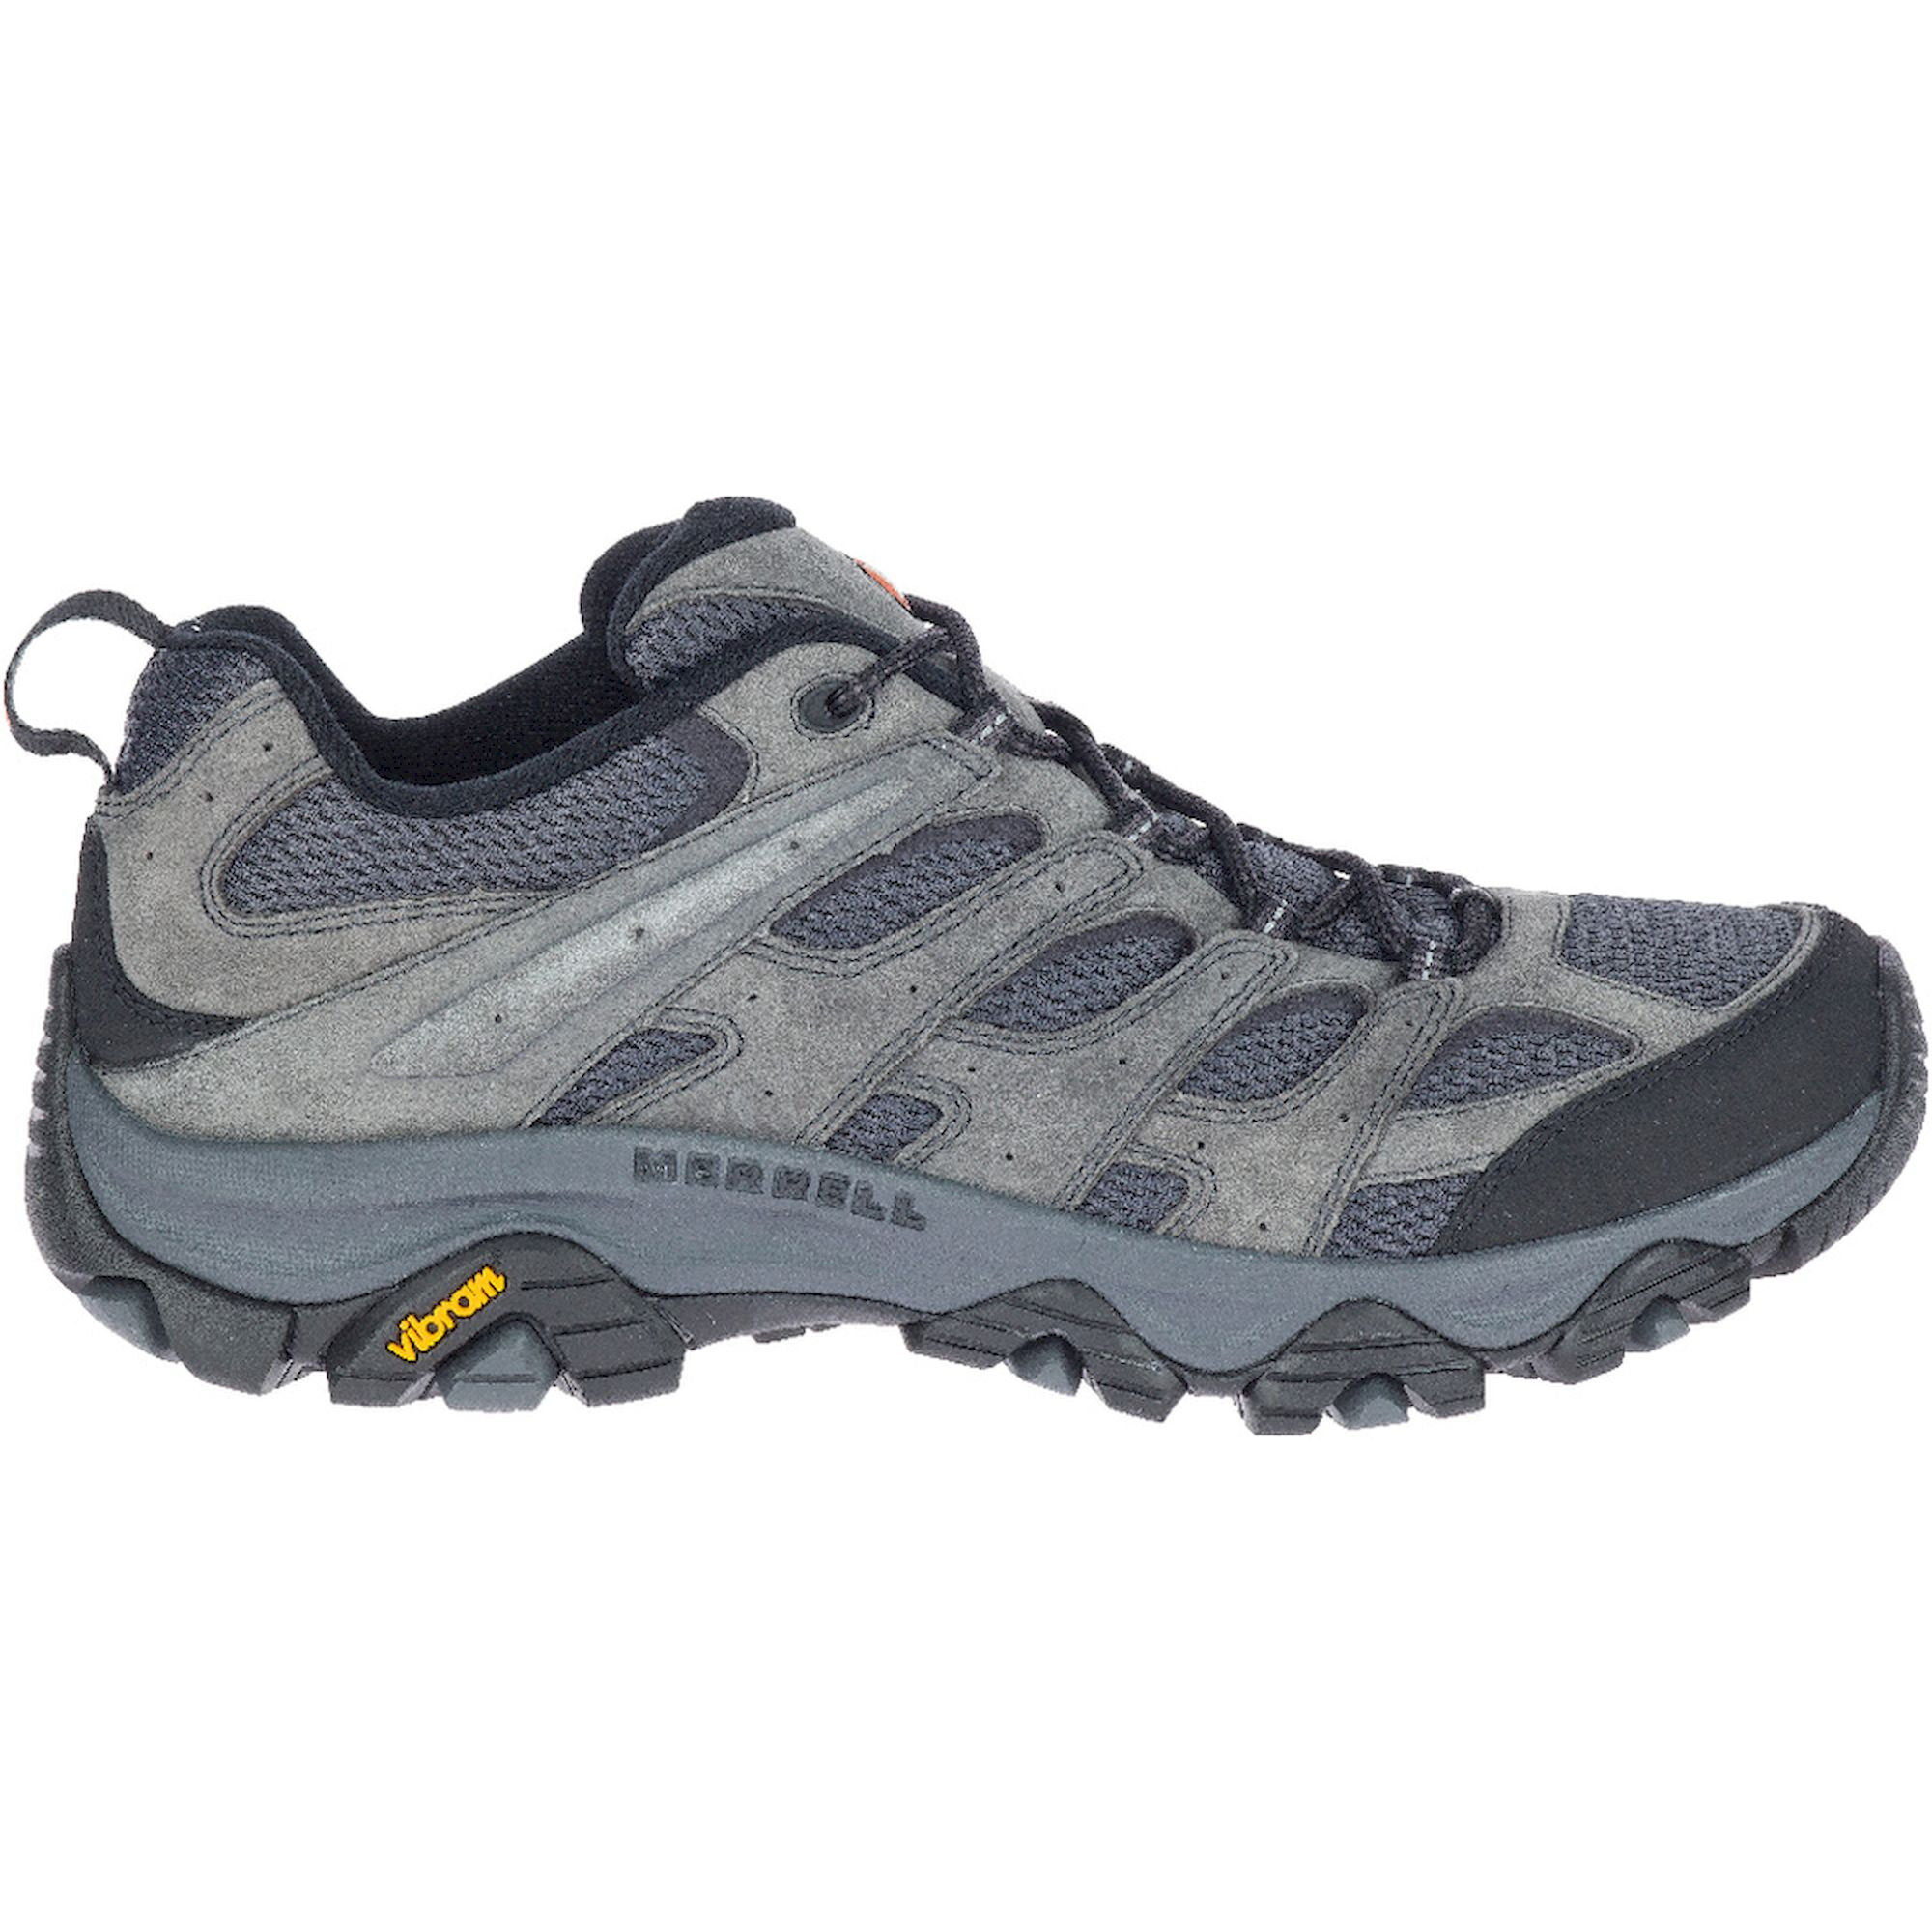 Merrell Moab 3 - Hiking shoes - Men's